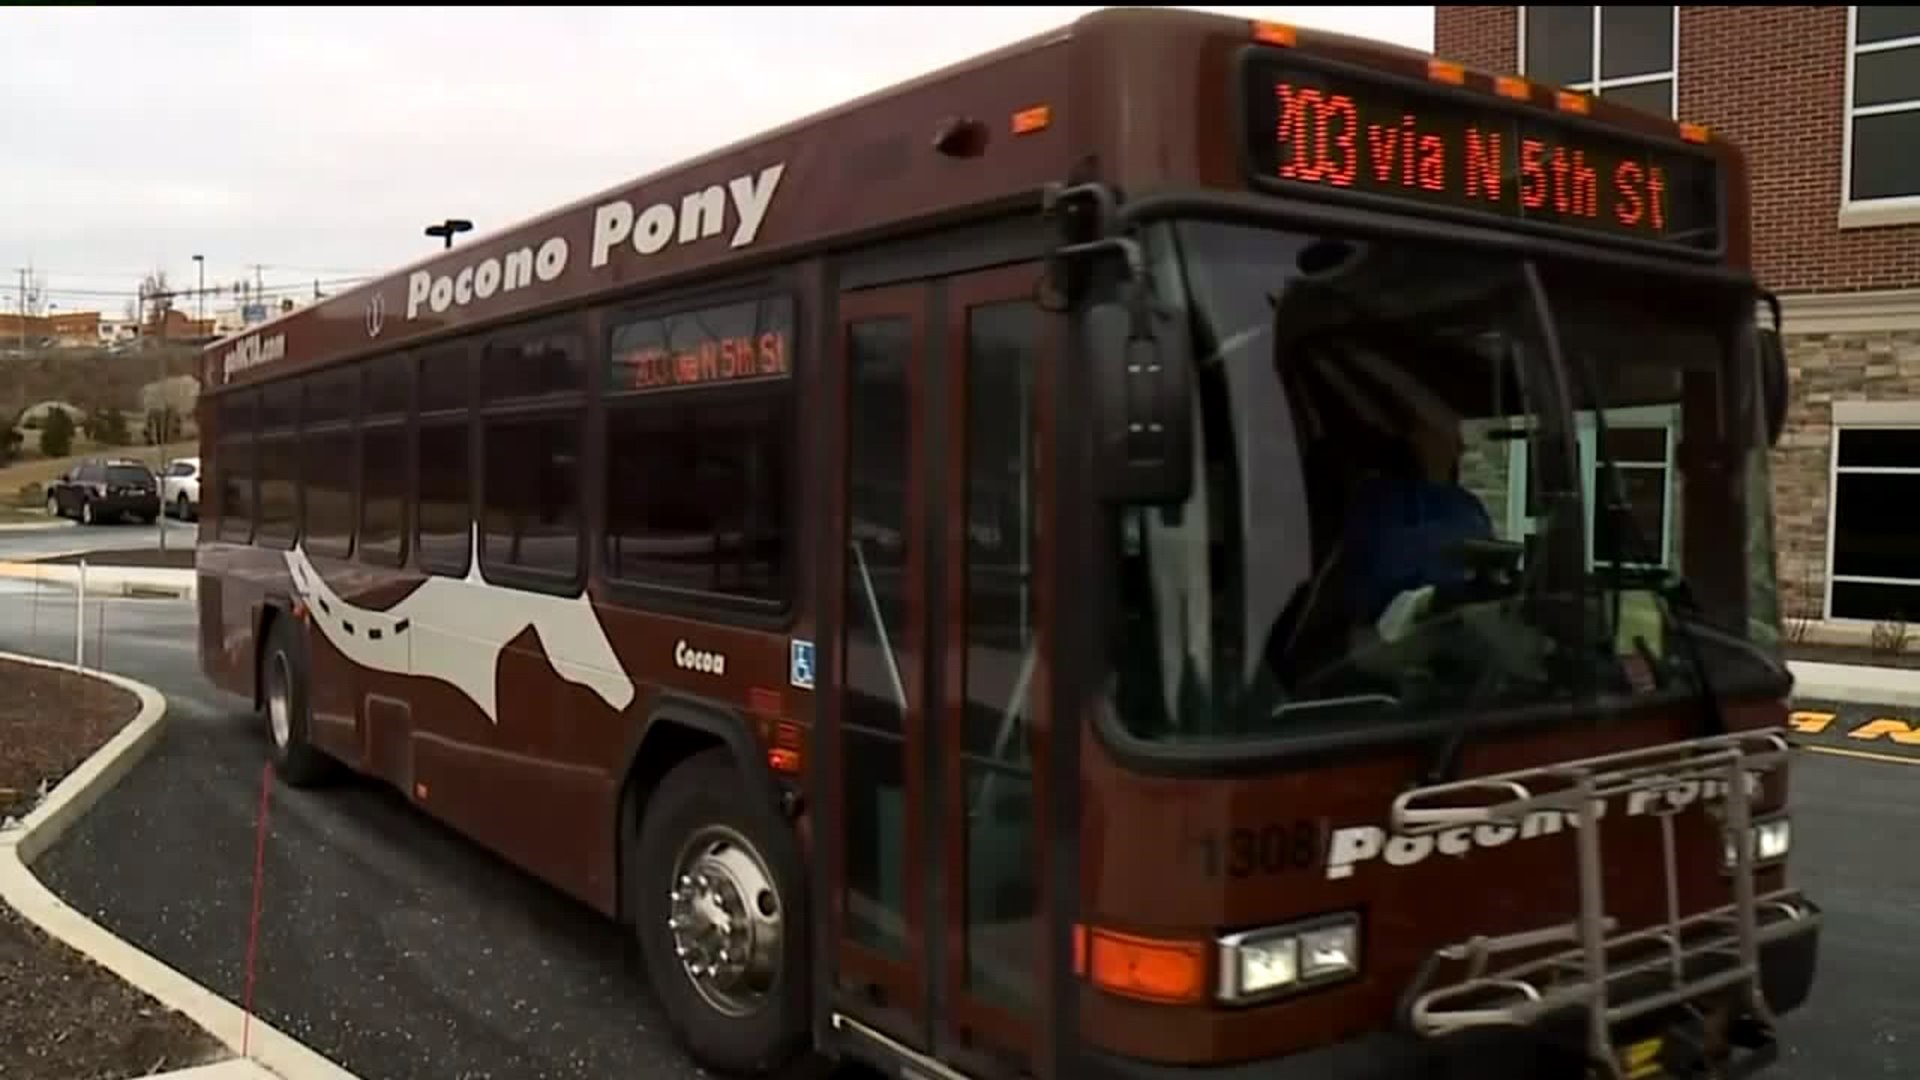 Pocono Pony Expands Services